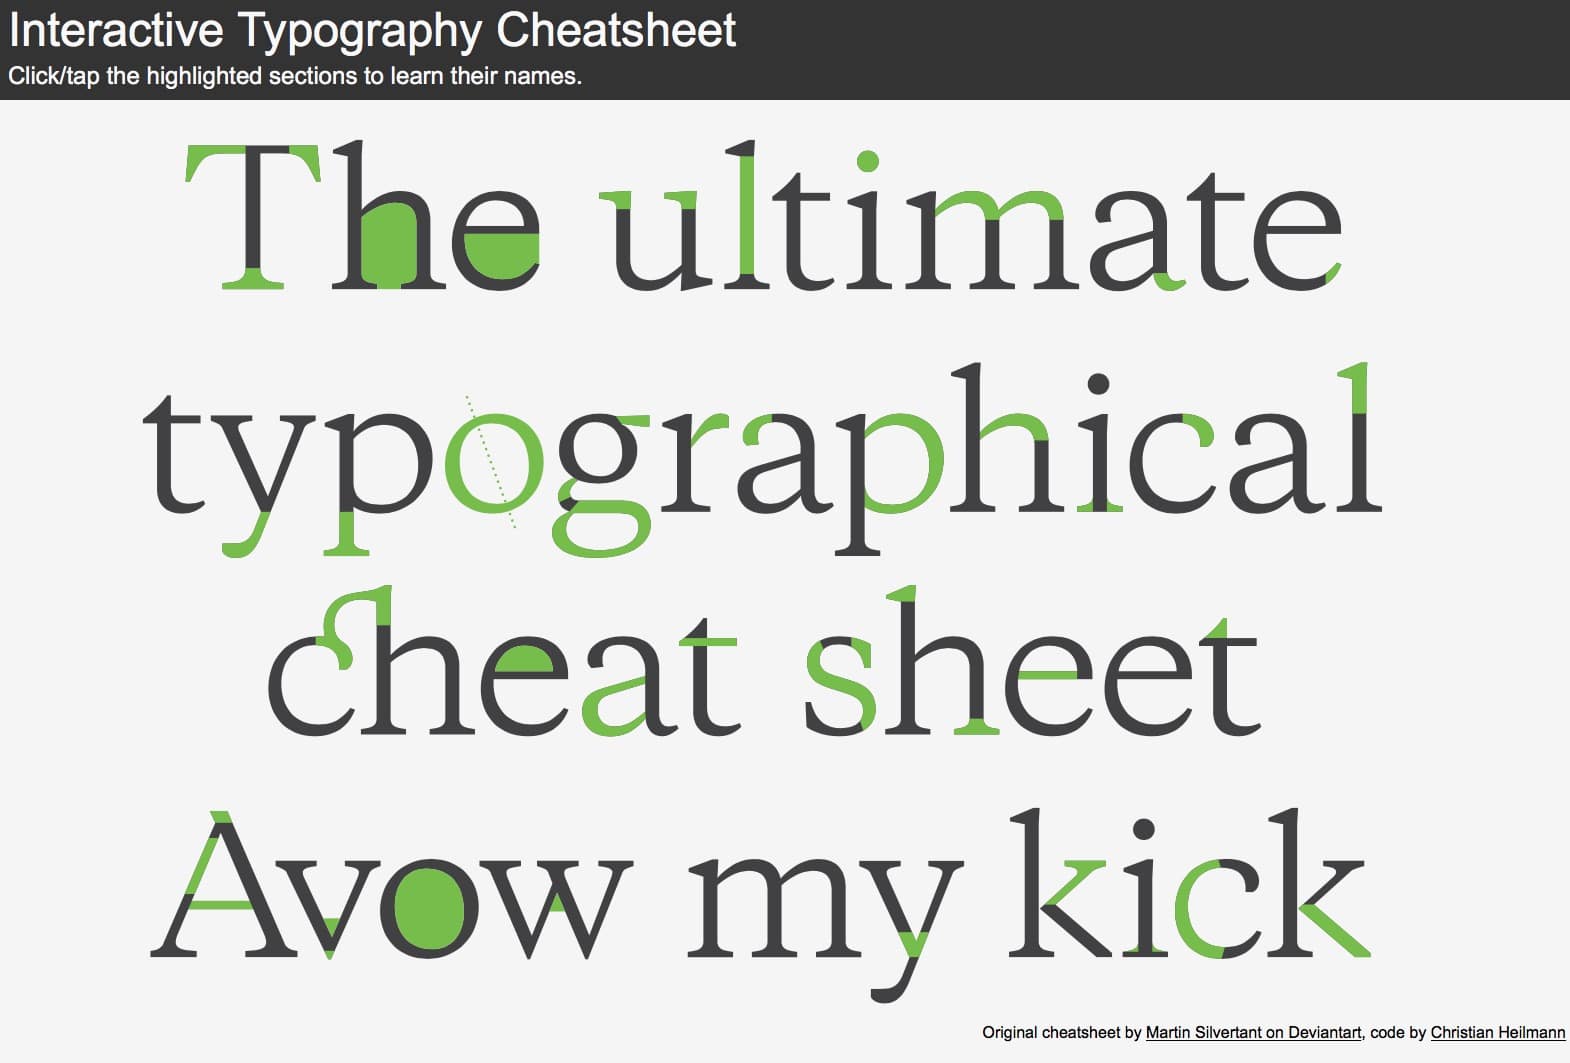 Interactive Typography Cheatsheet by Martin Silvertant & Christian Heilmann